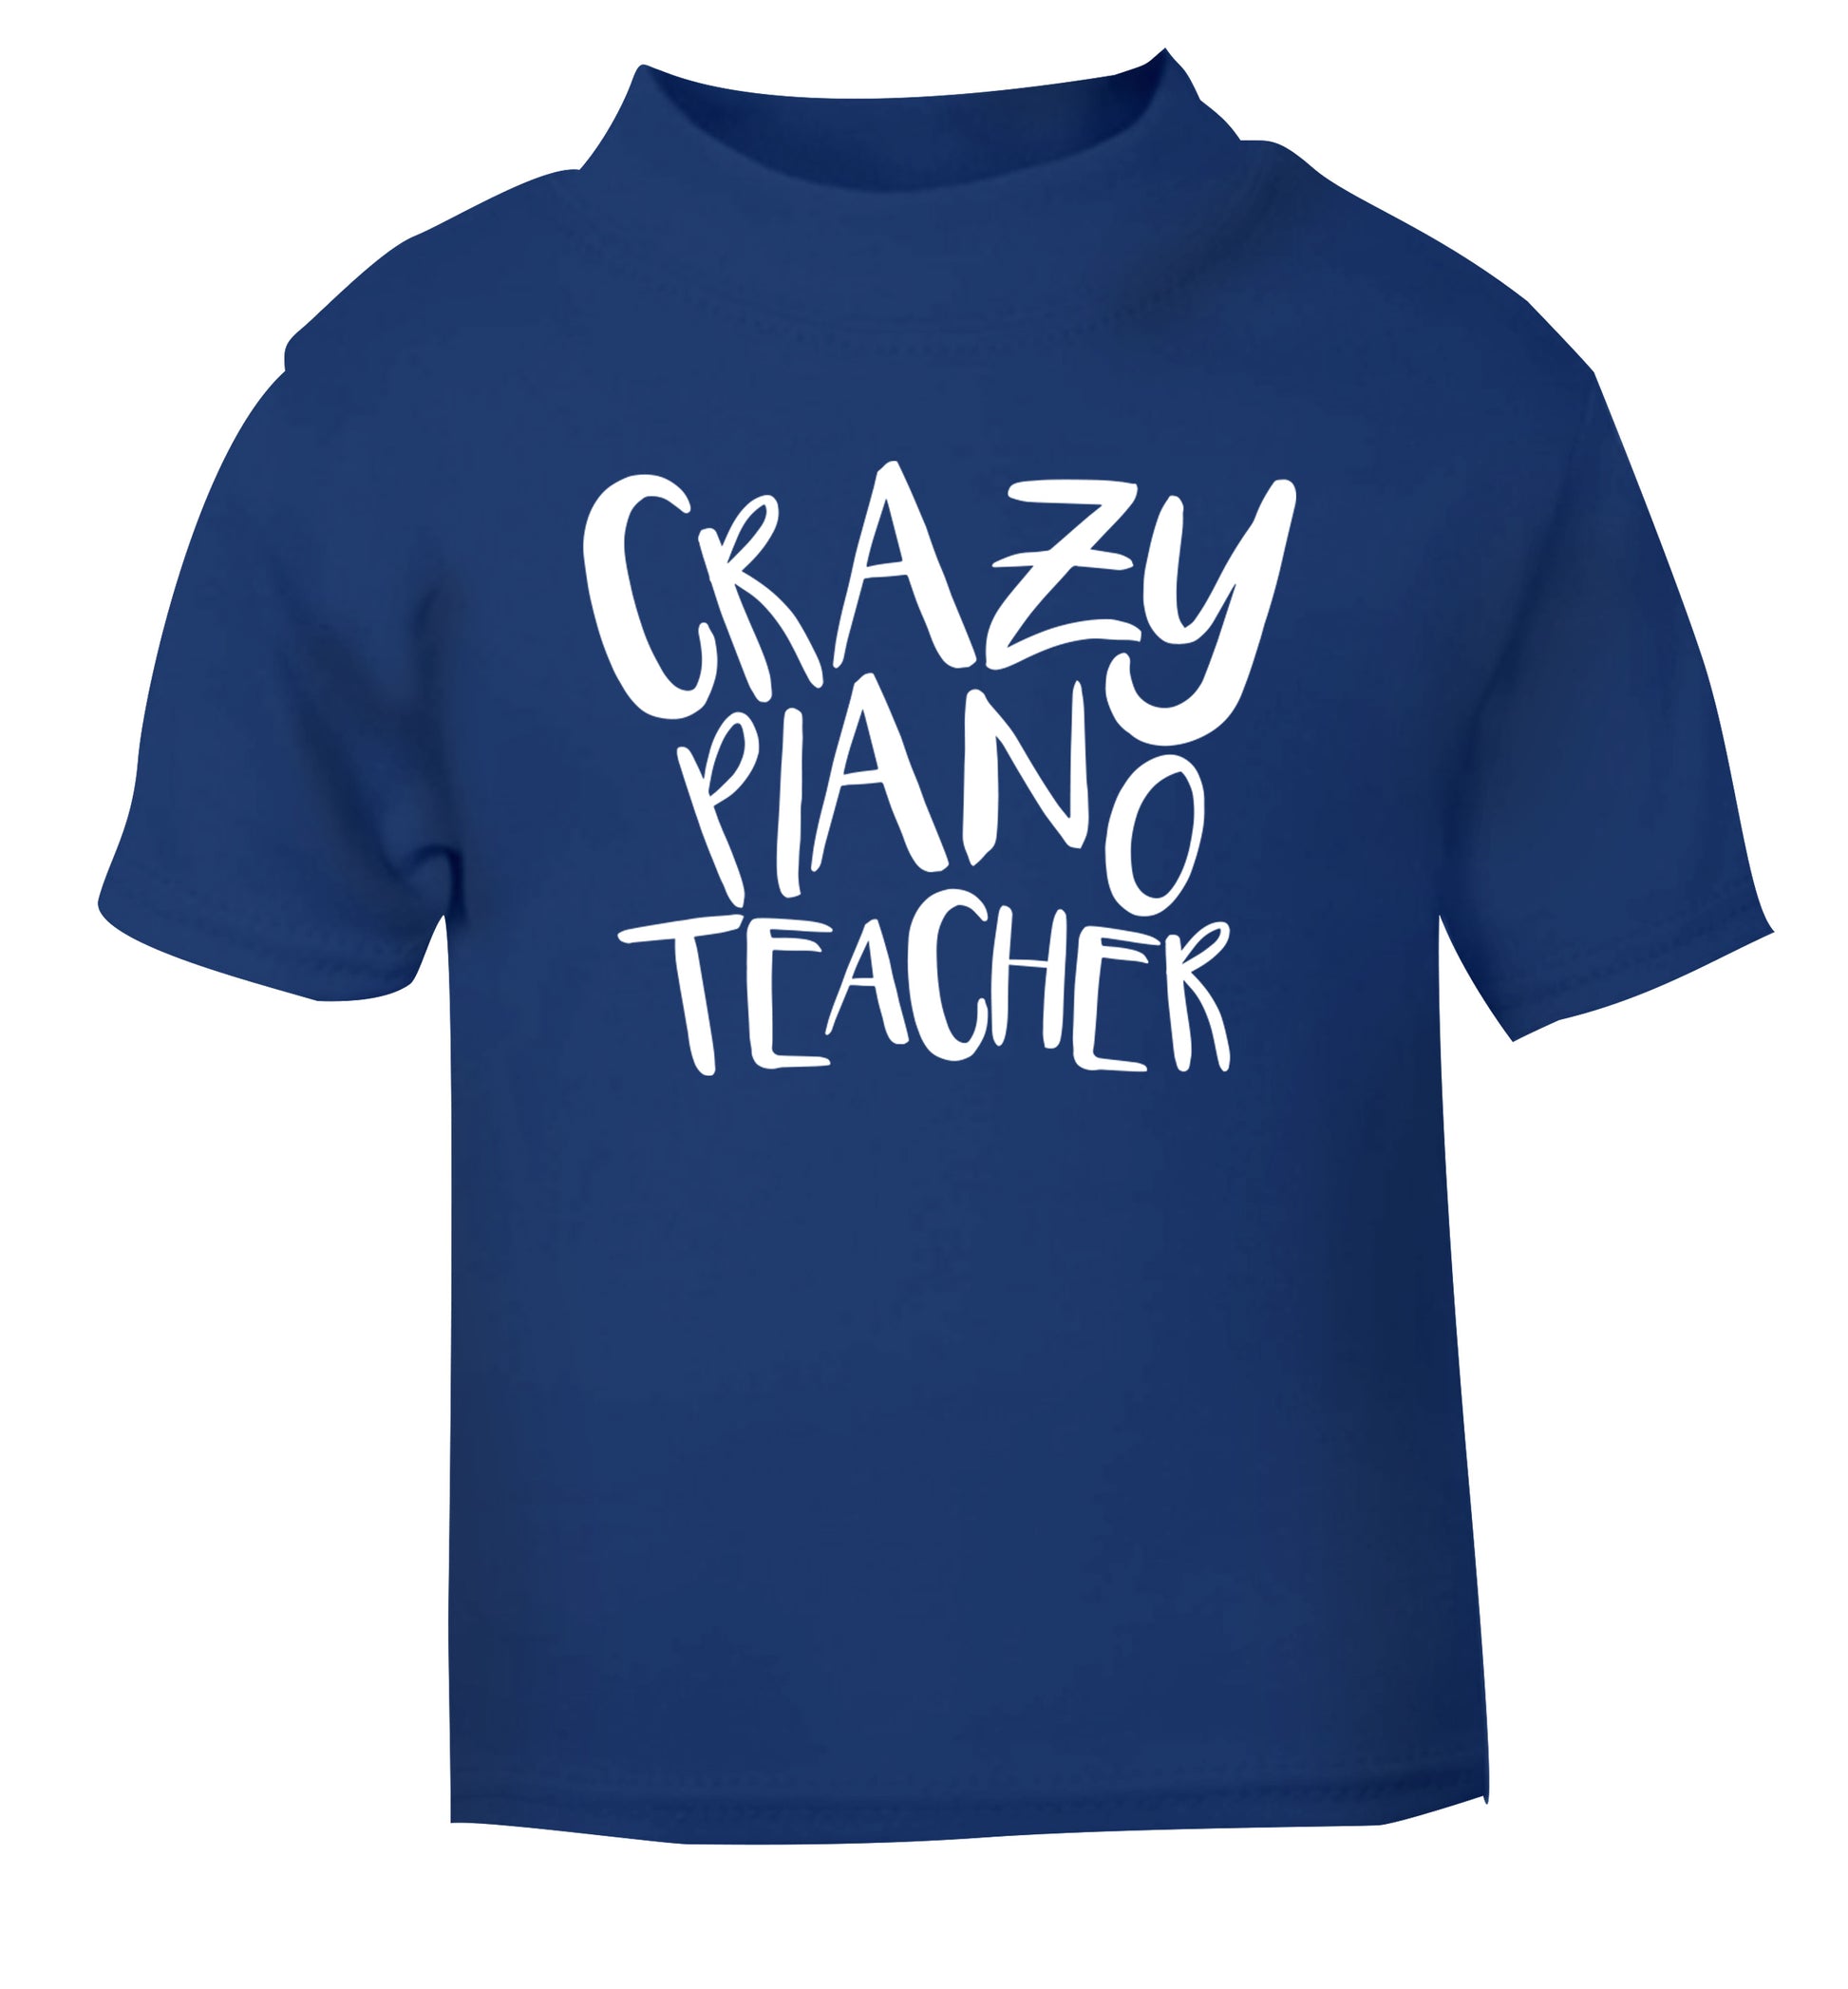 Crazy piano teacher blue Baby Toddler Tshirt 2 Years